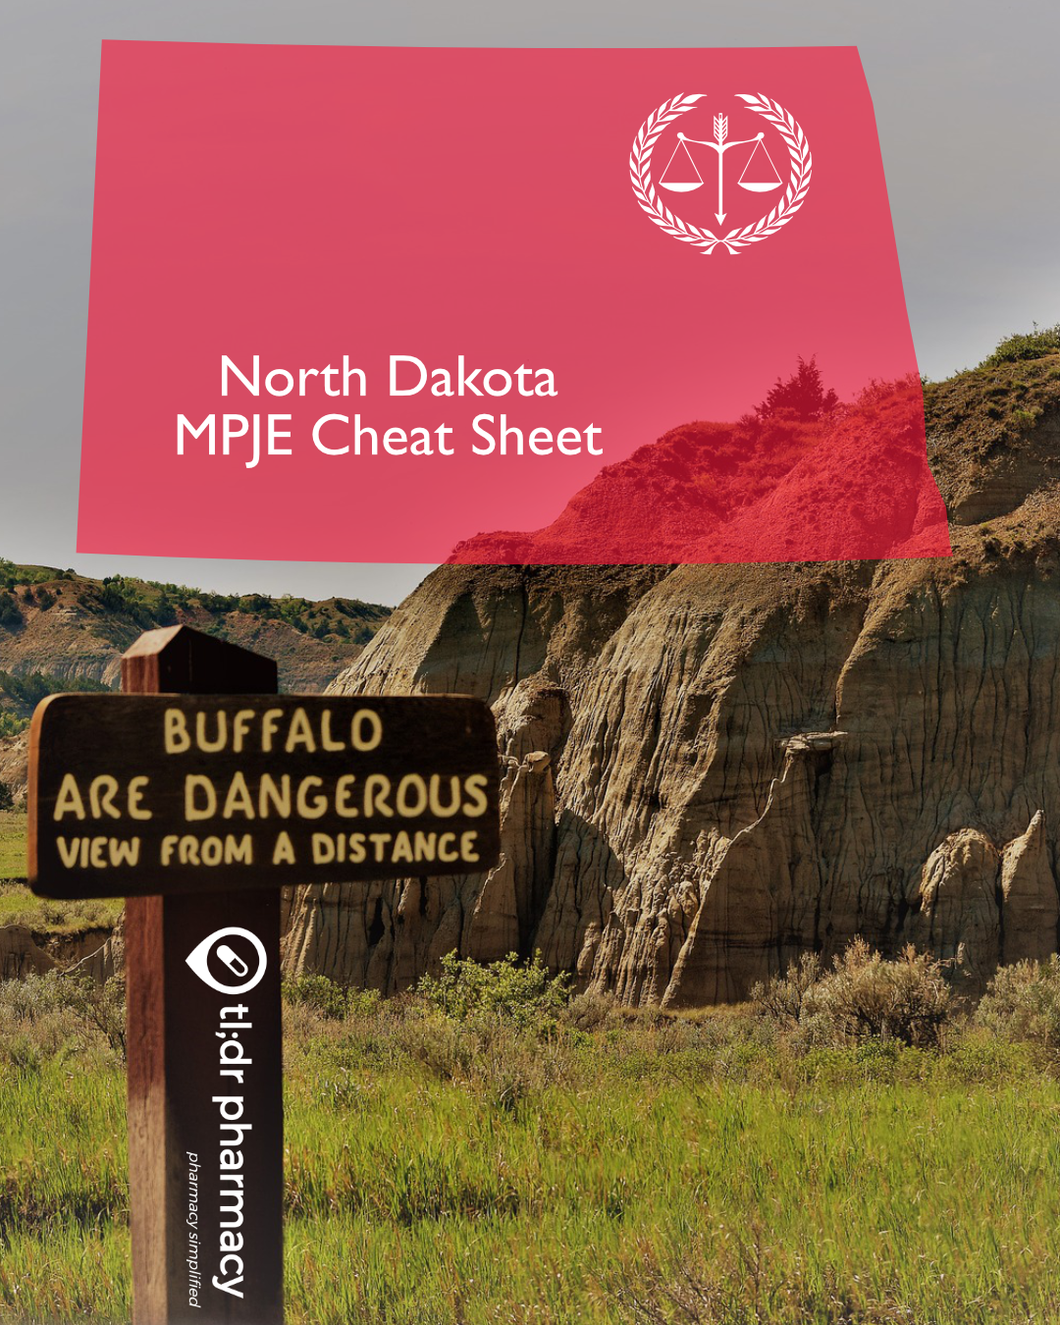 MPJE Cheat Sheet: North Dakota